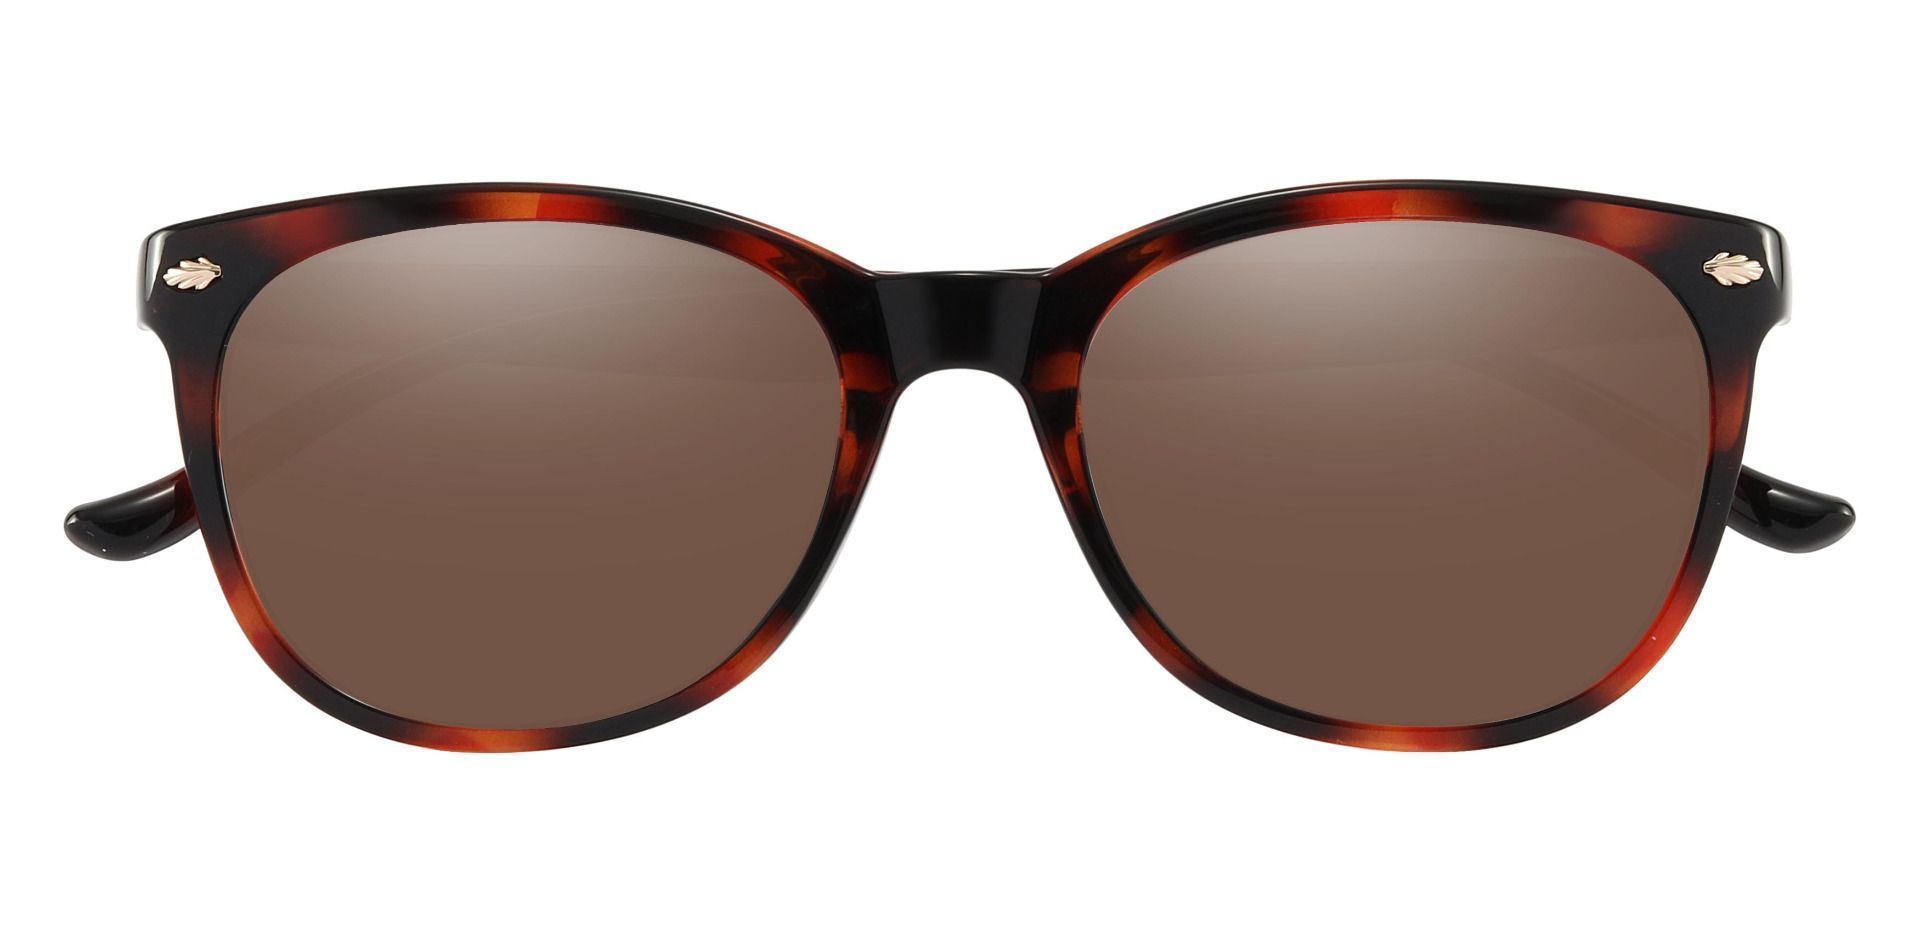 Pavilion Square Progressive Sunglasses - Tortoise Frame With Brown Lenses